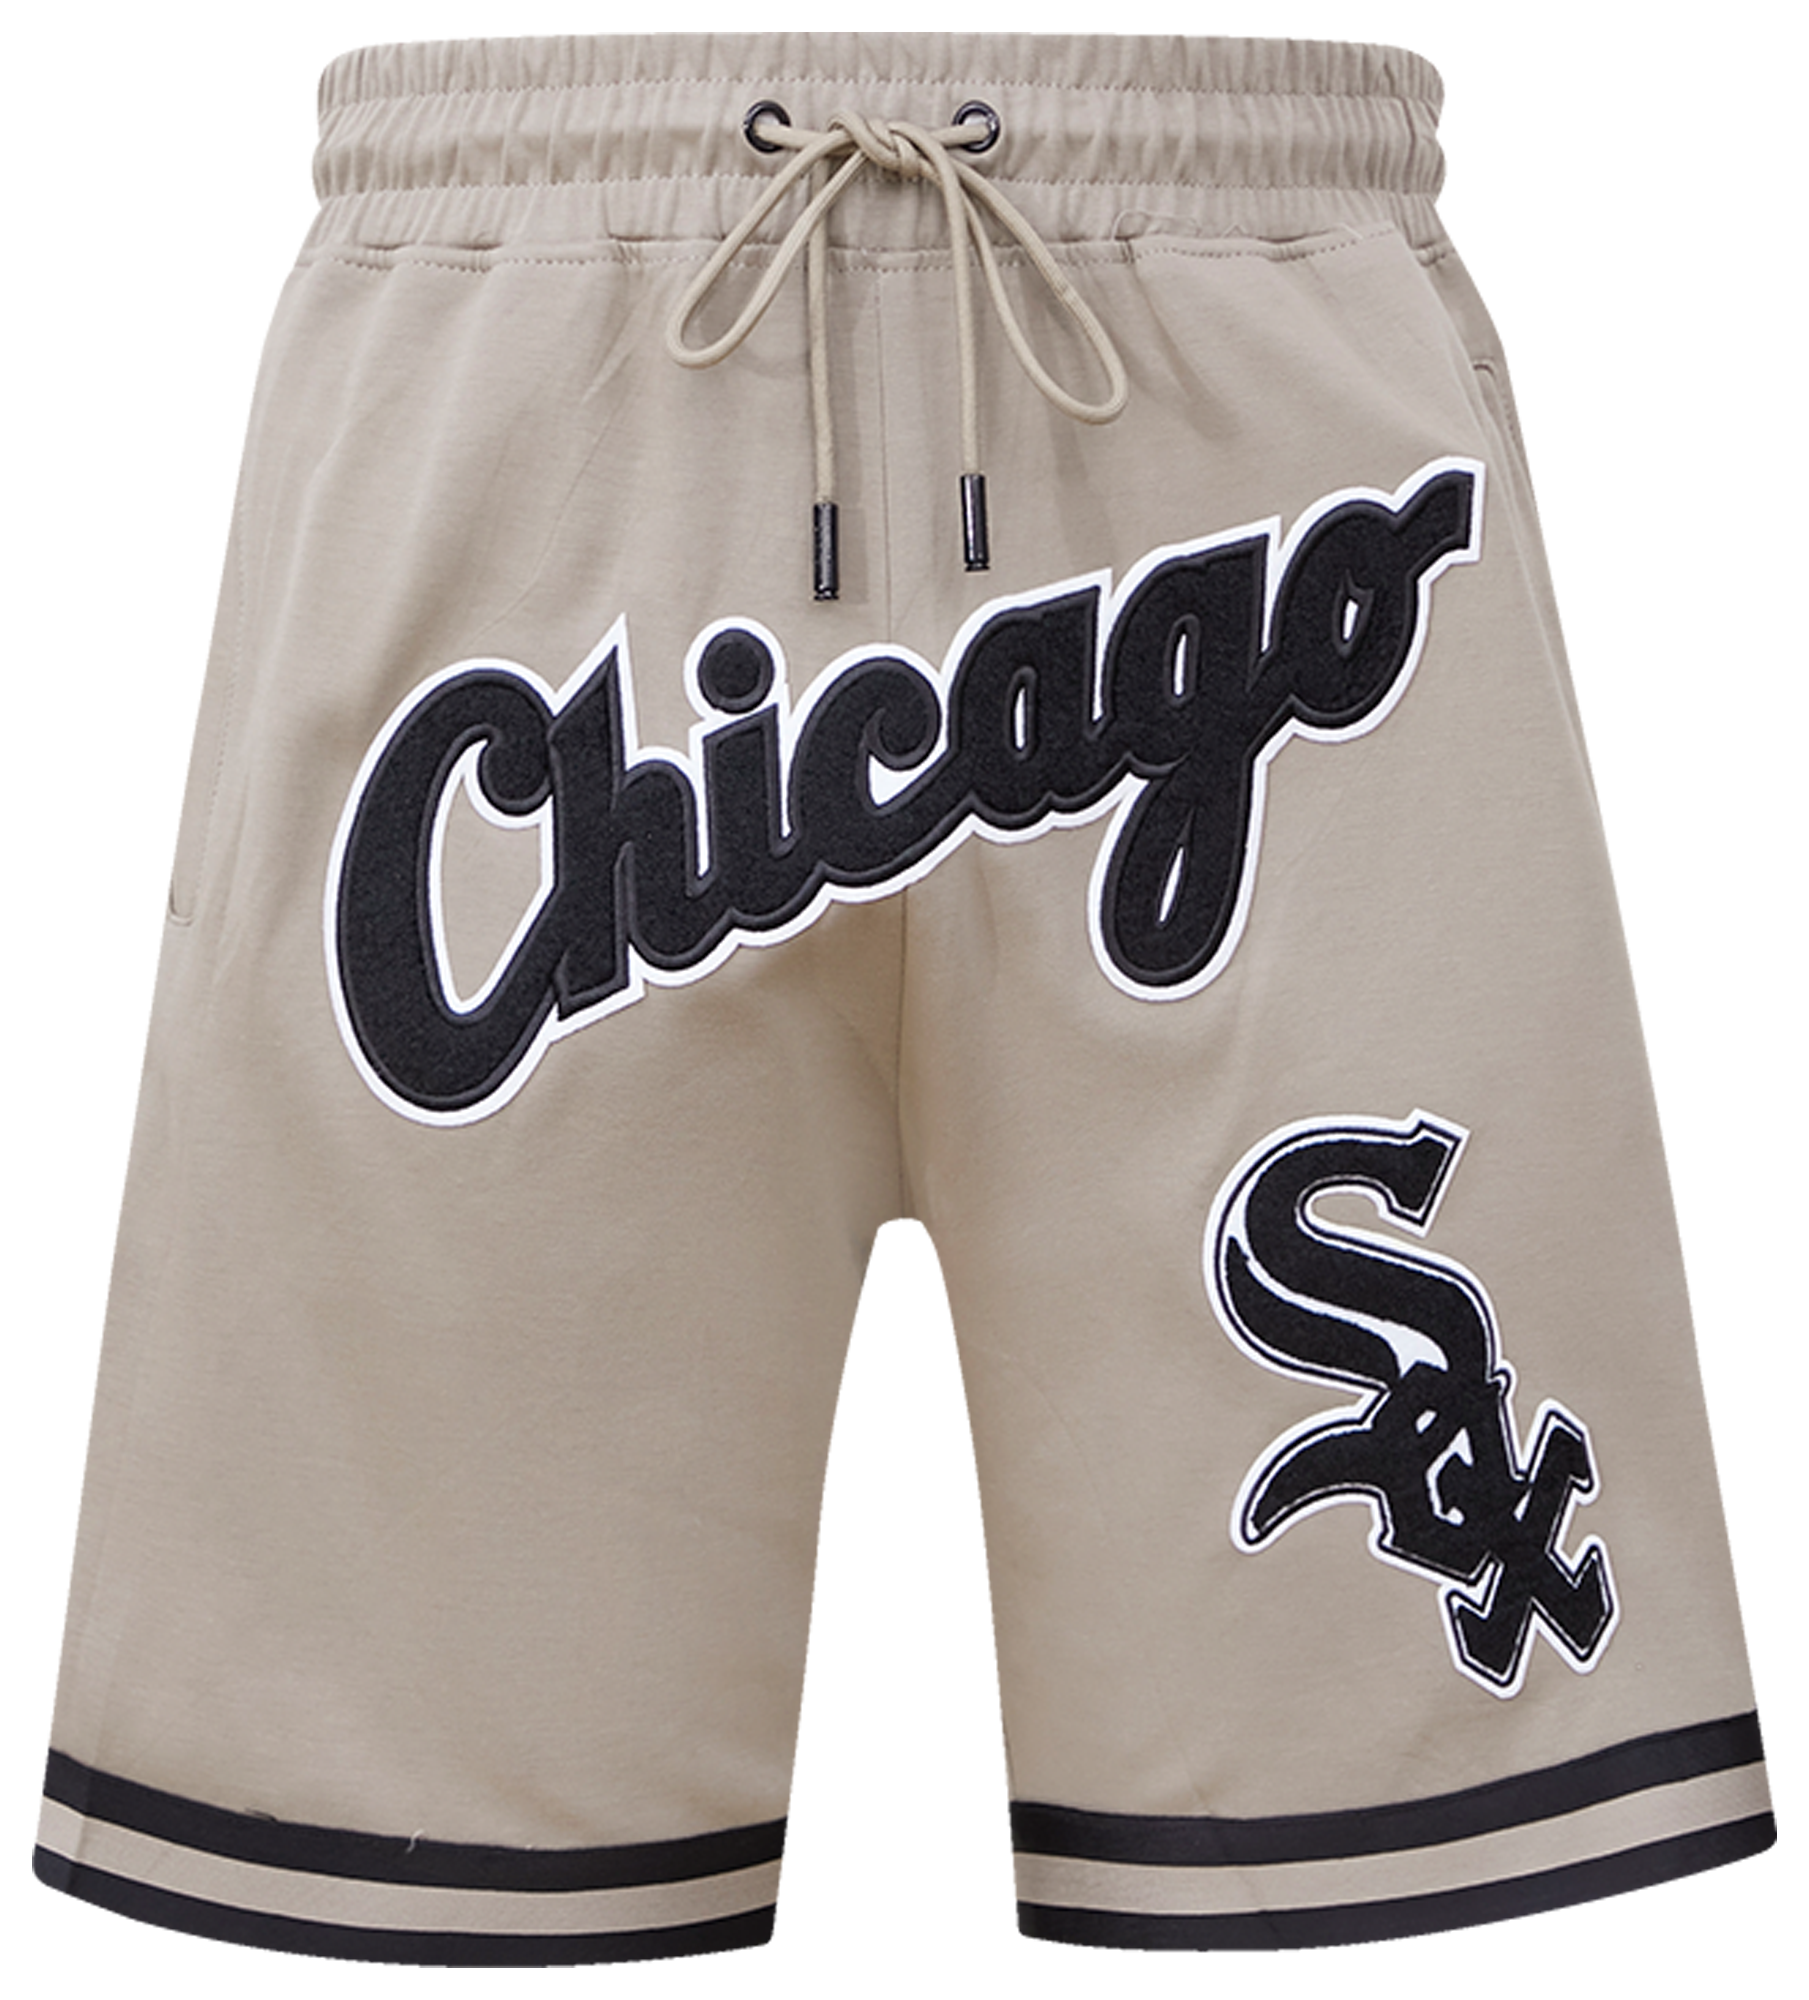 chicago white sox shorts｜TikTok Search